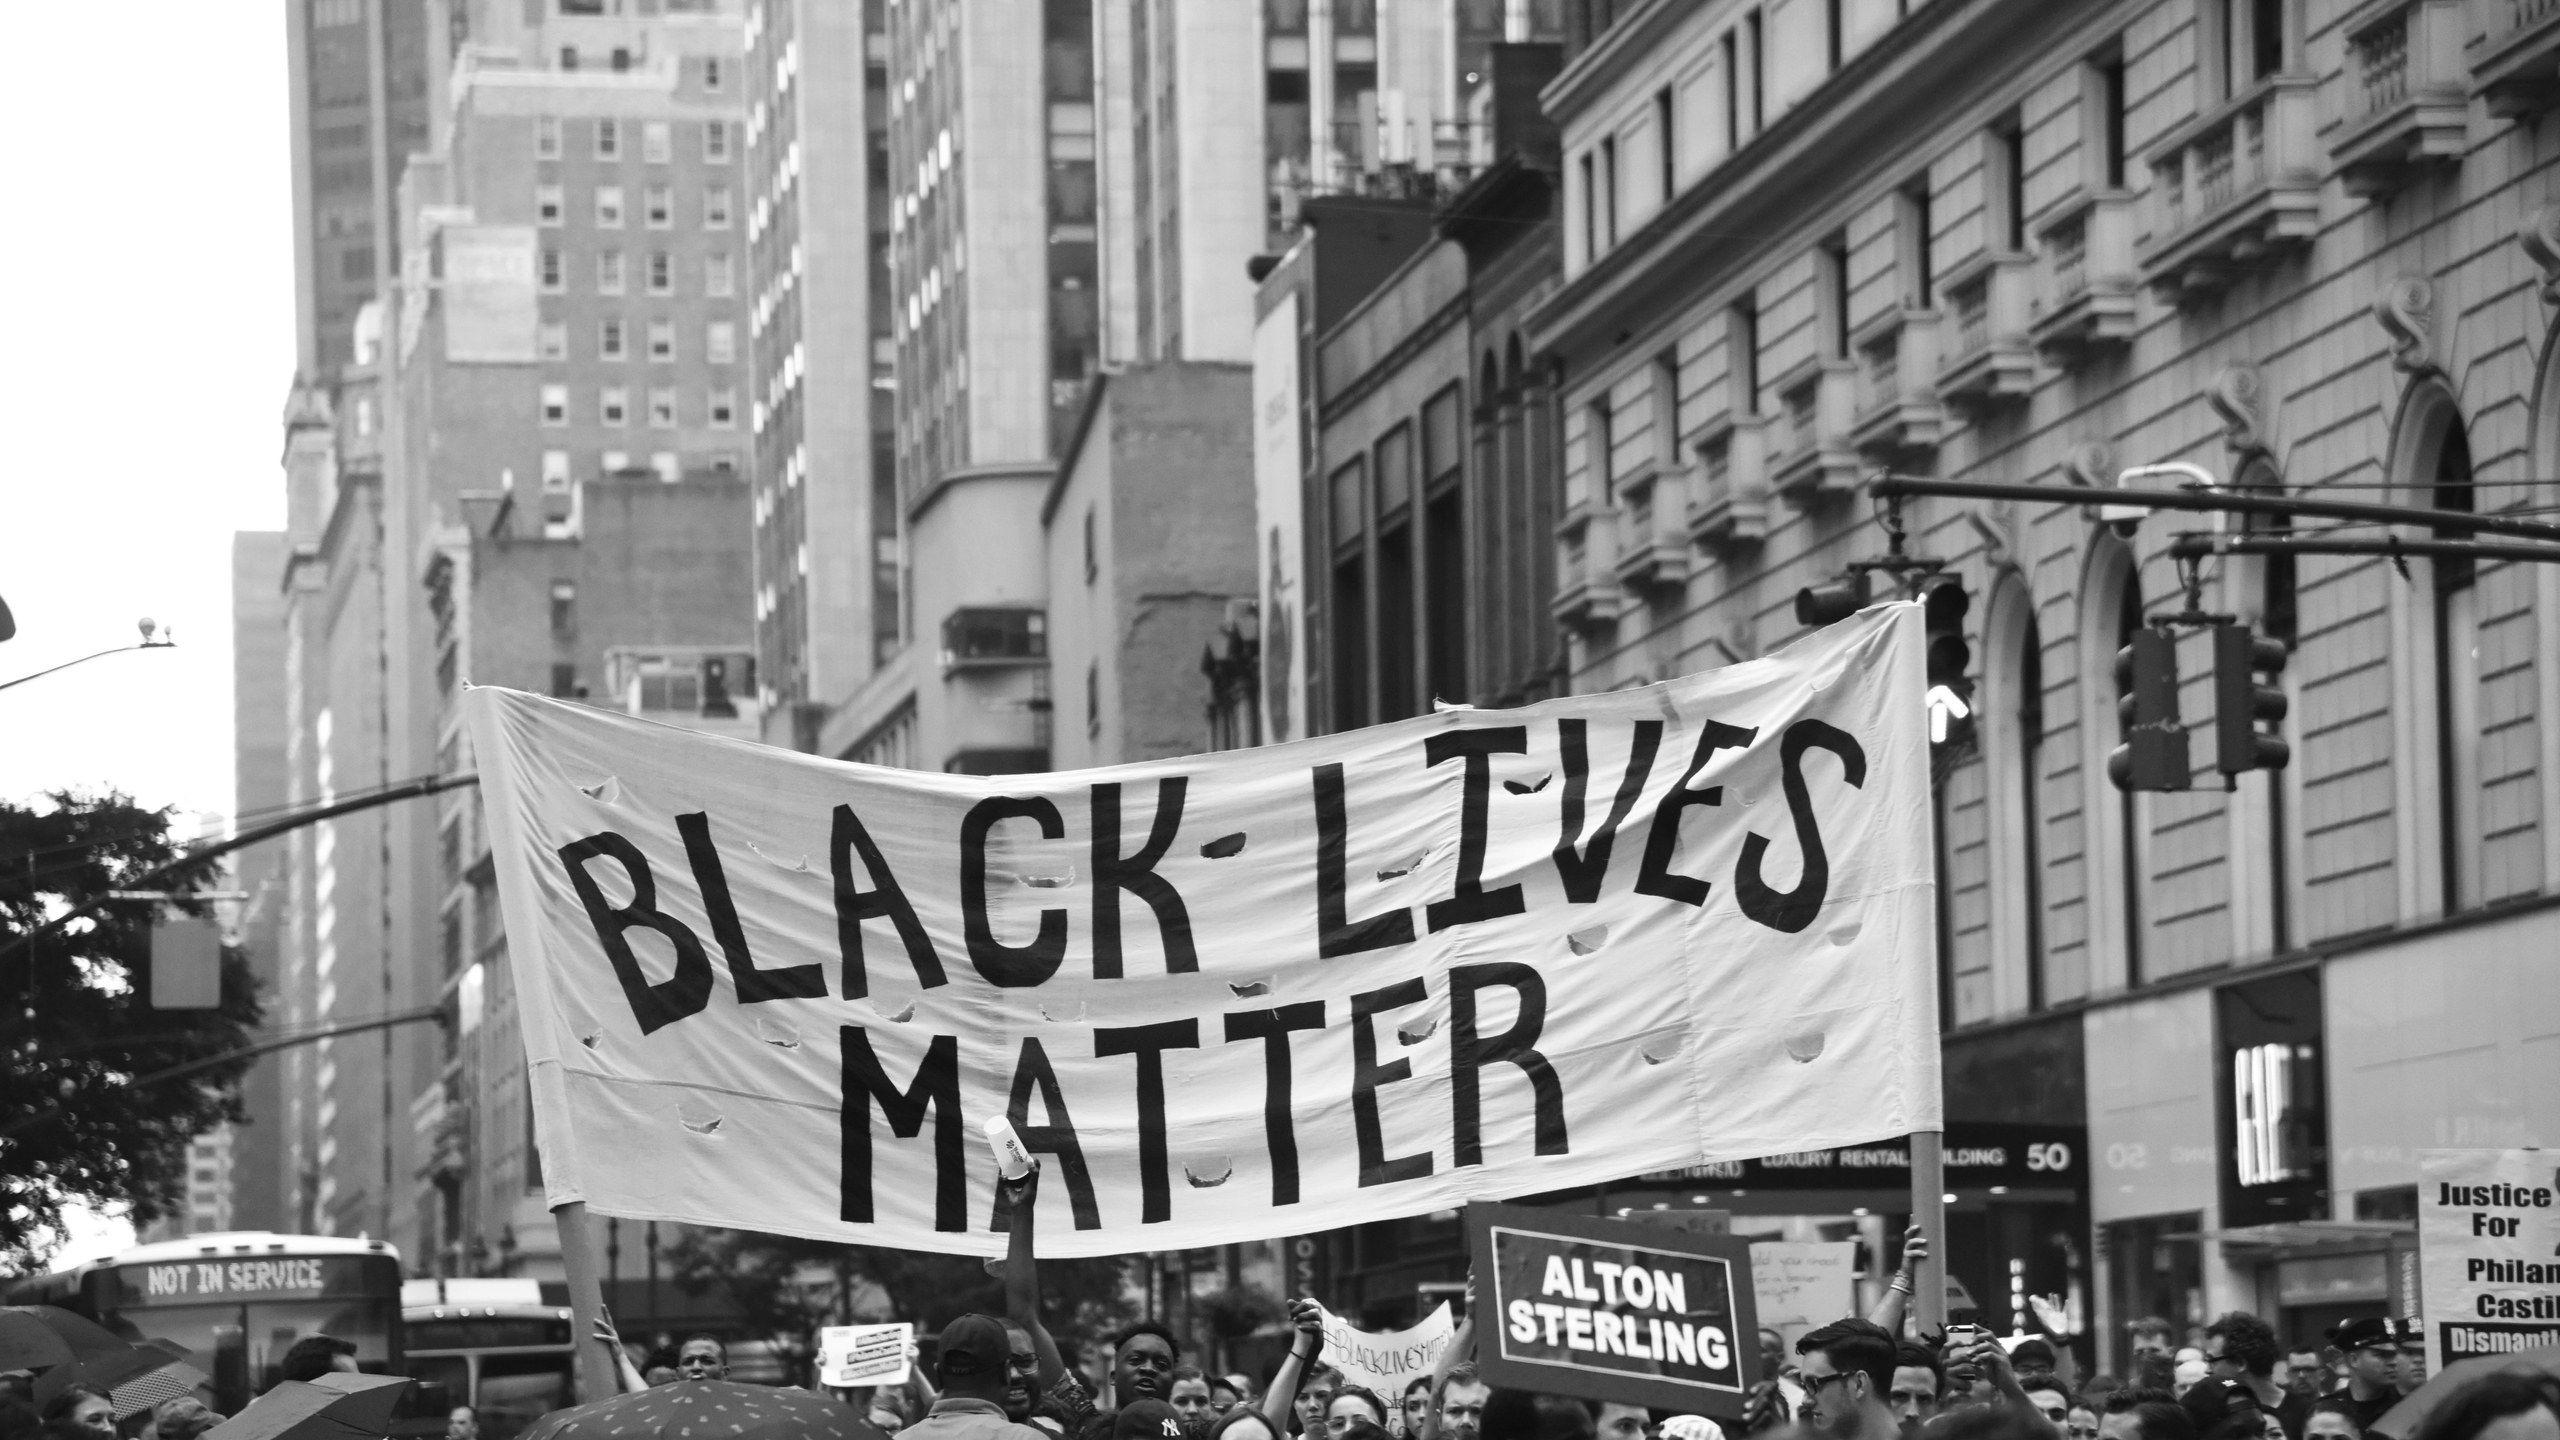 Black Lives Matter Wallpaper Template  PosterMyWall